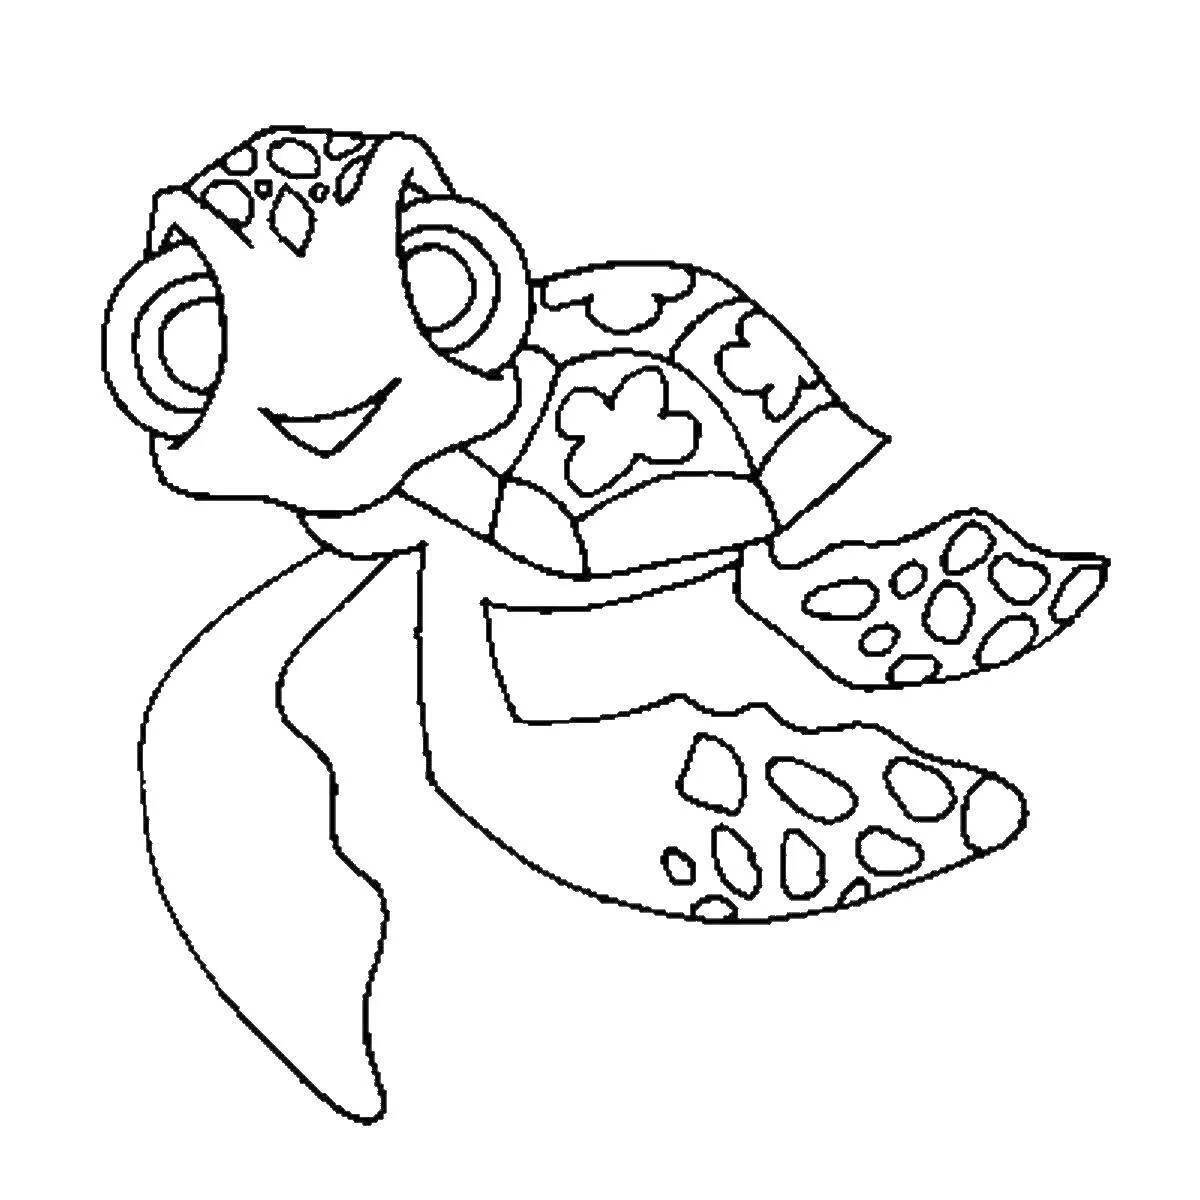 Coloring book shining cute turtle